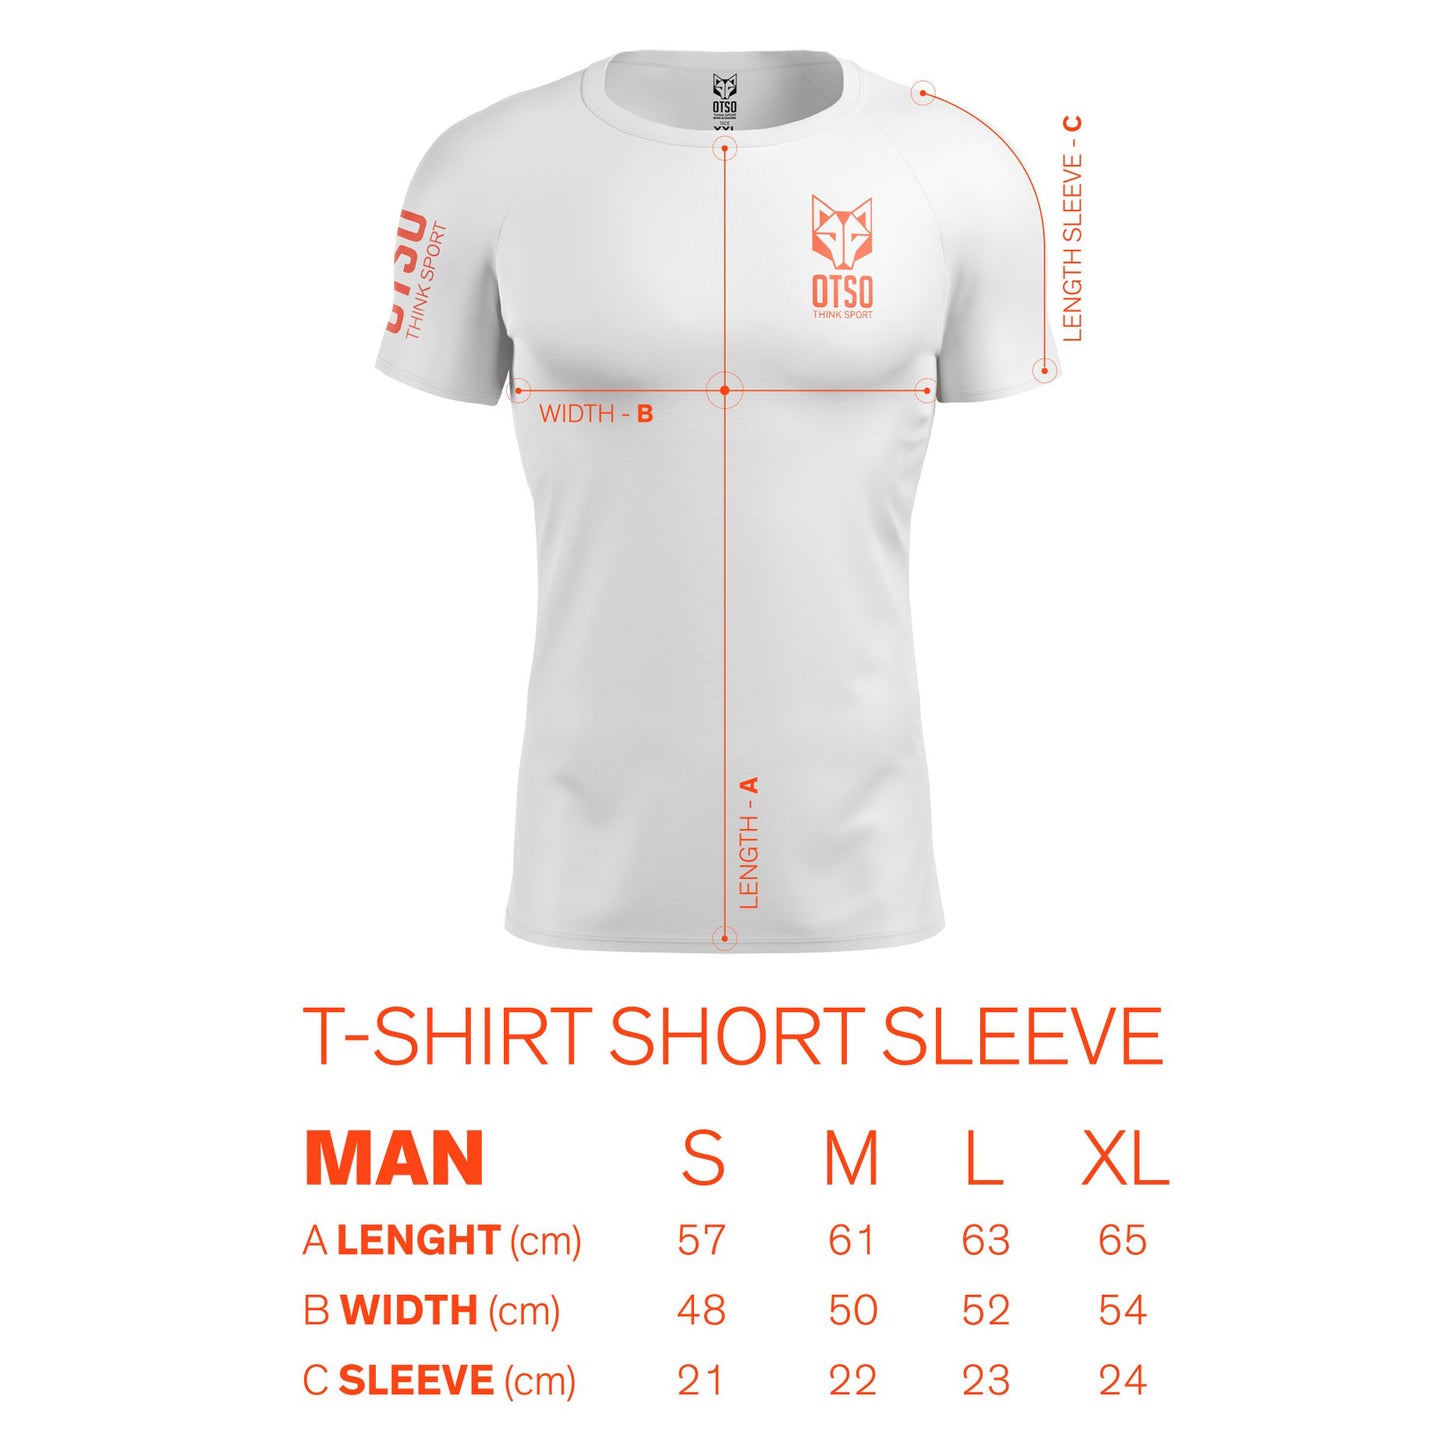 Men's short sleeve shirt - Run Venezia (Outlet)